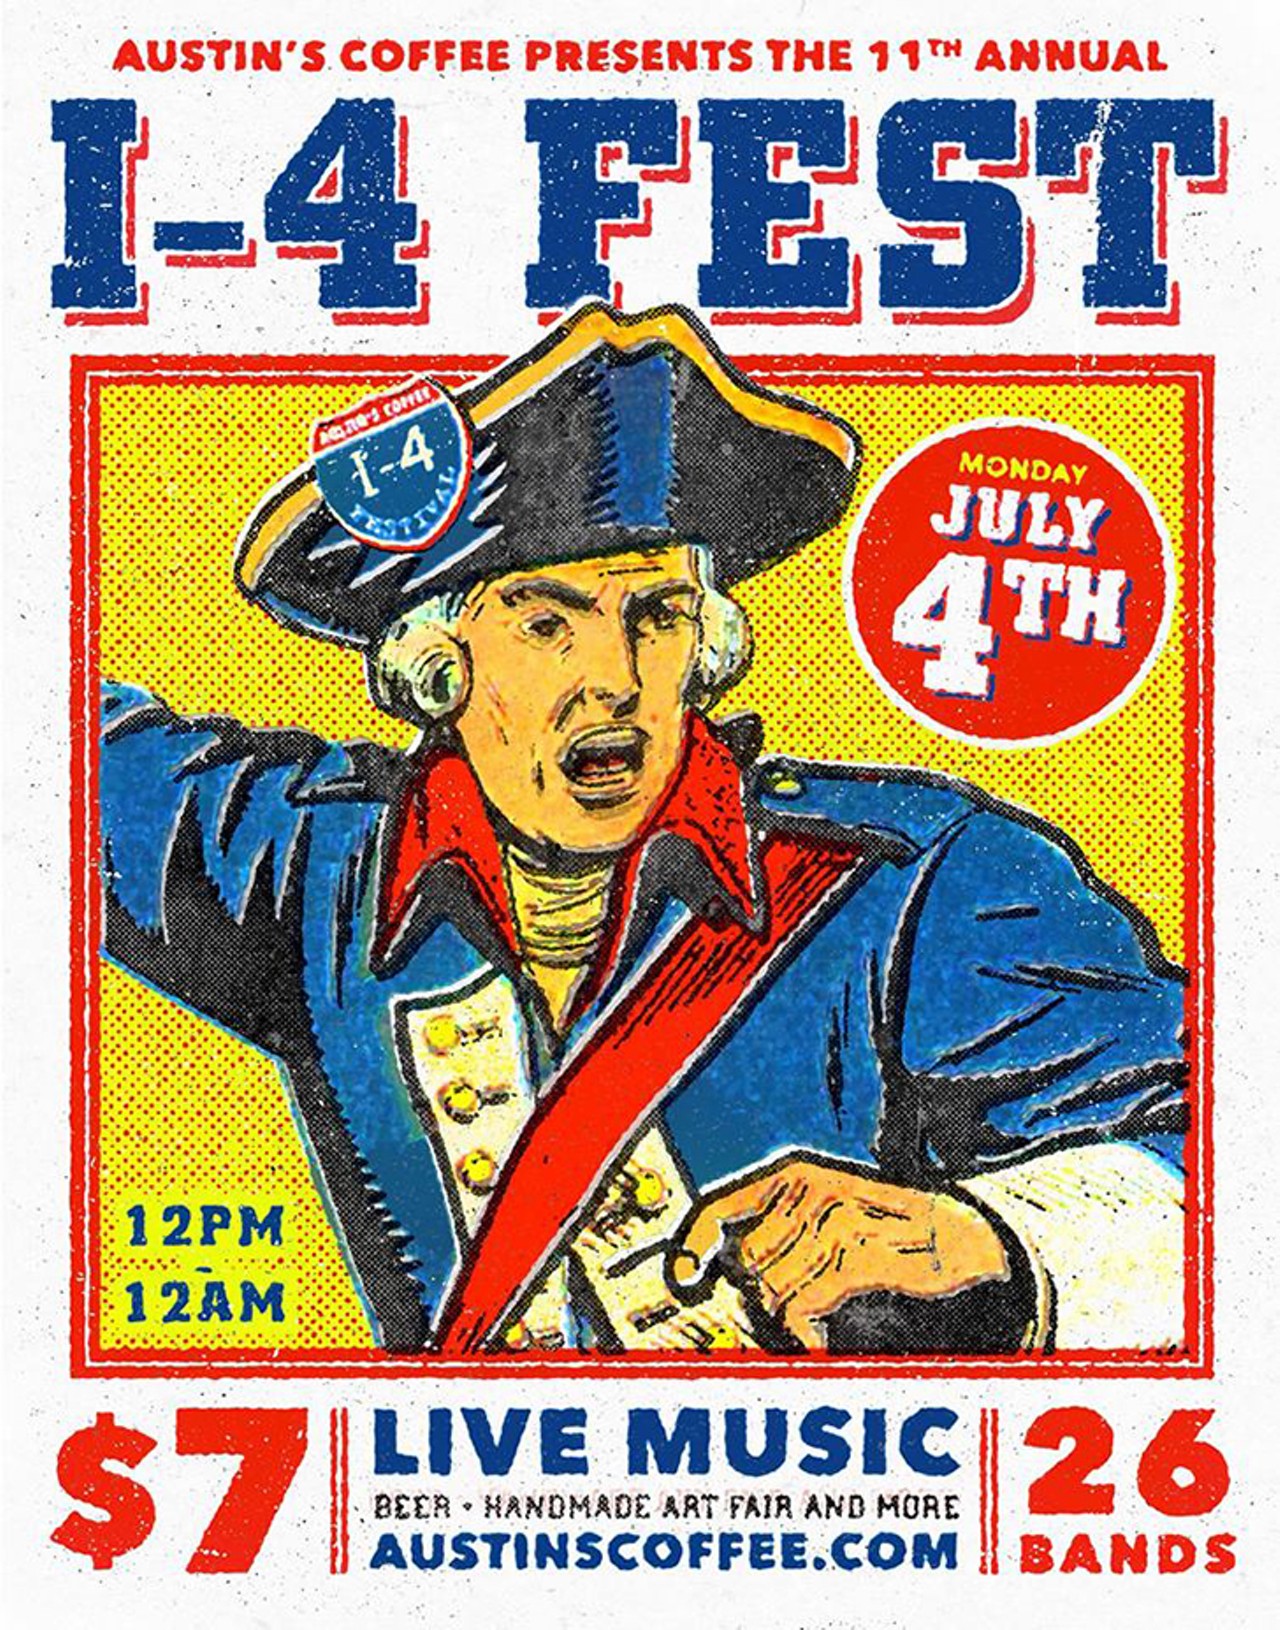 Monday, July 4I-4 Fest at Austin's Coffee